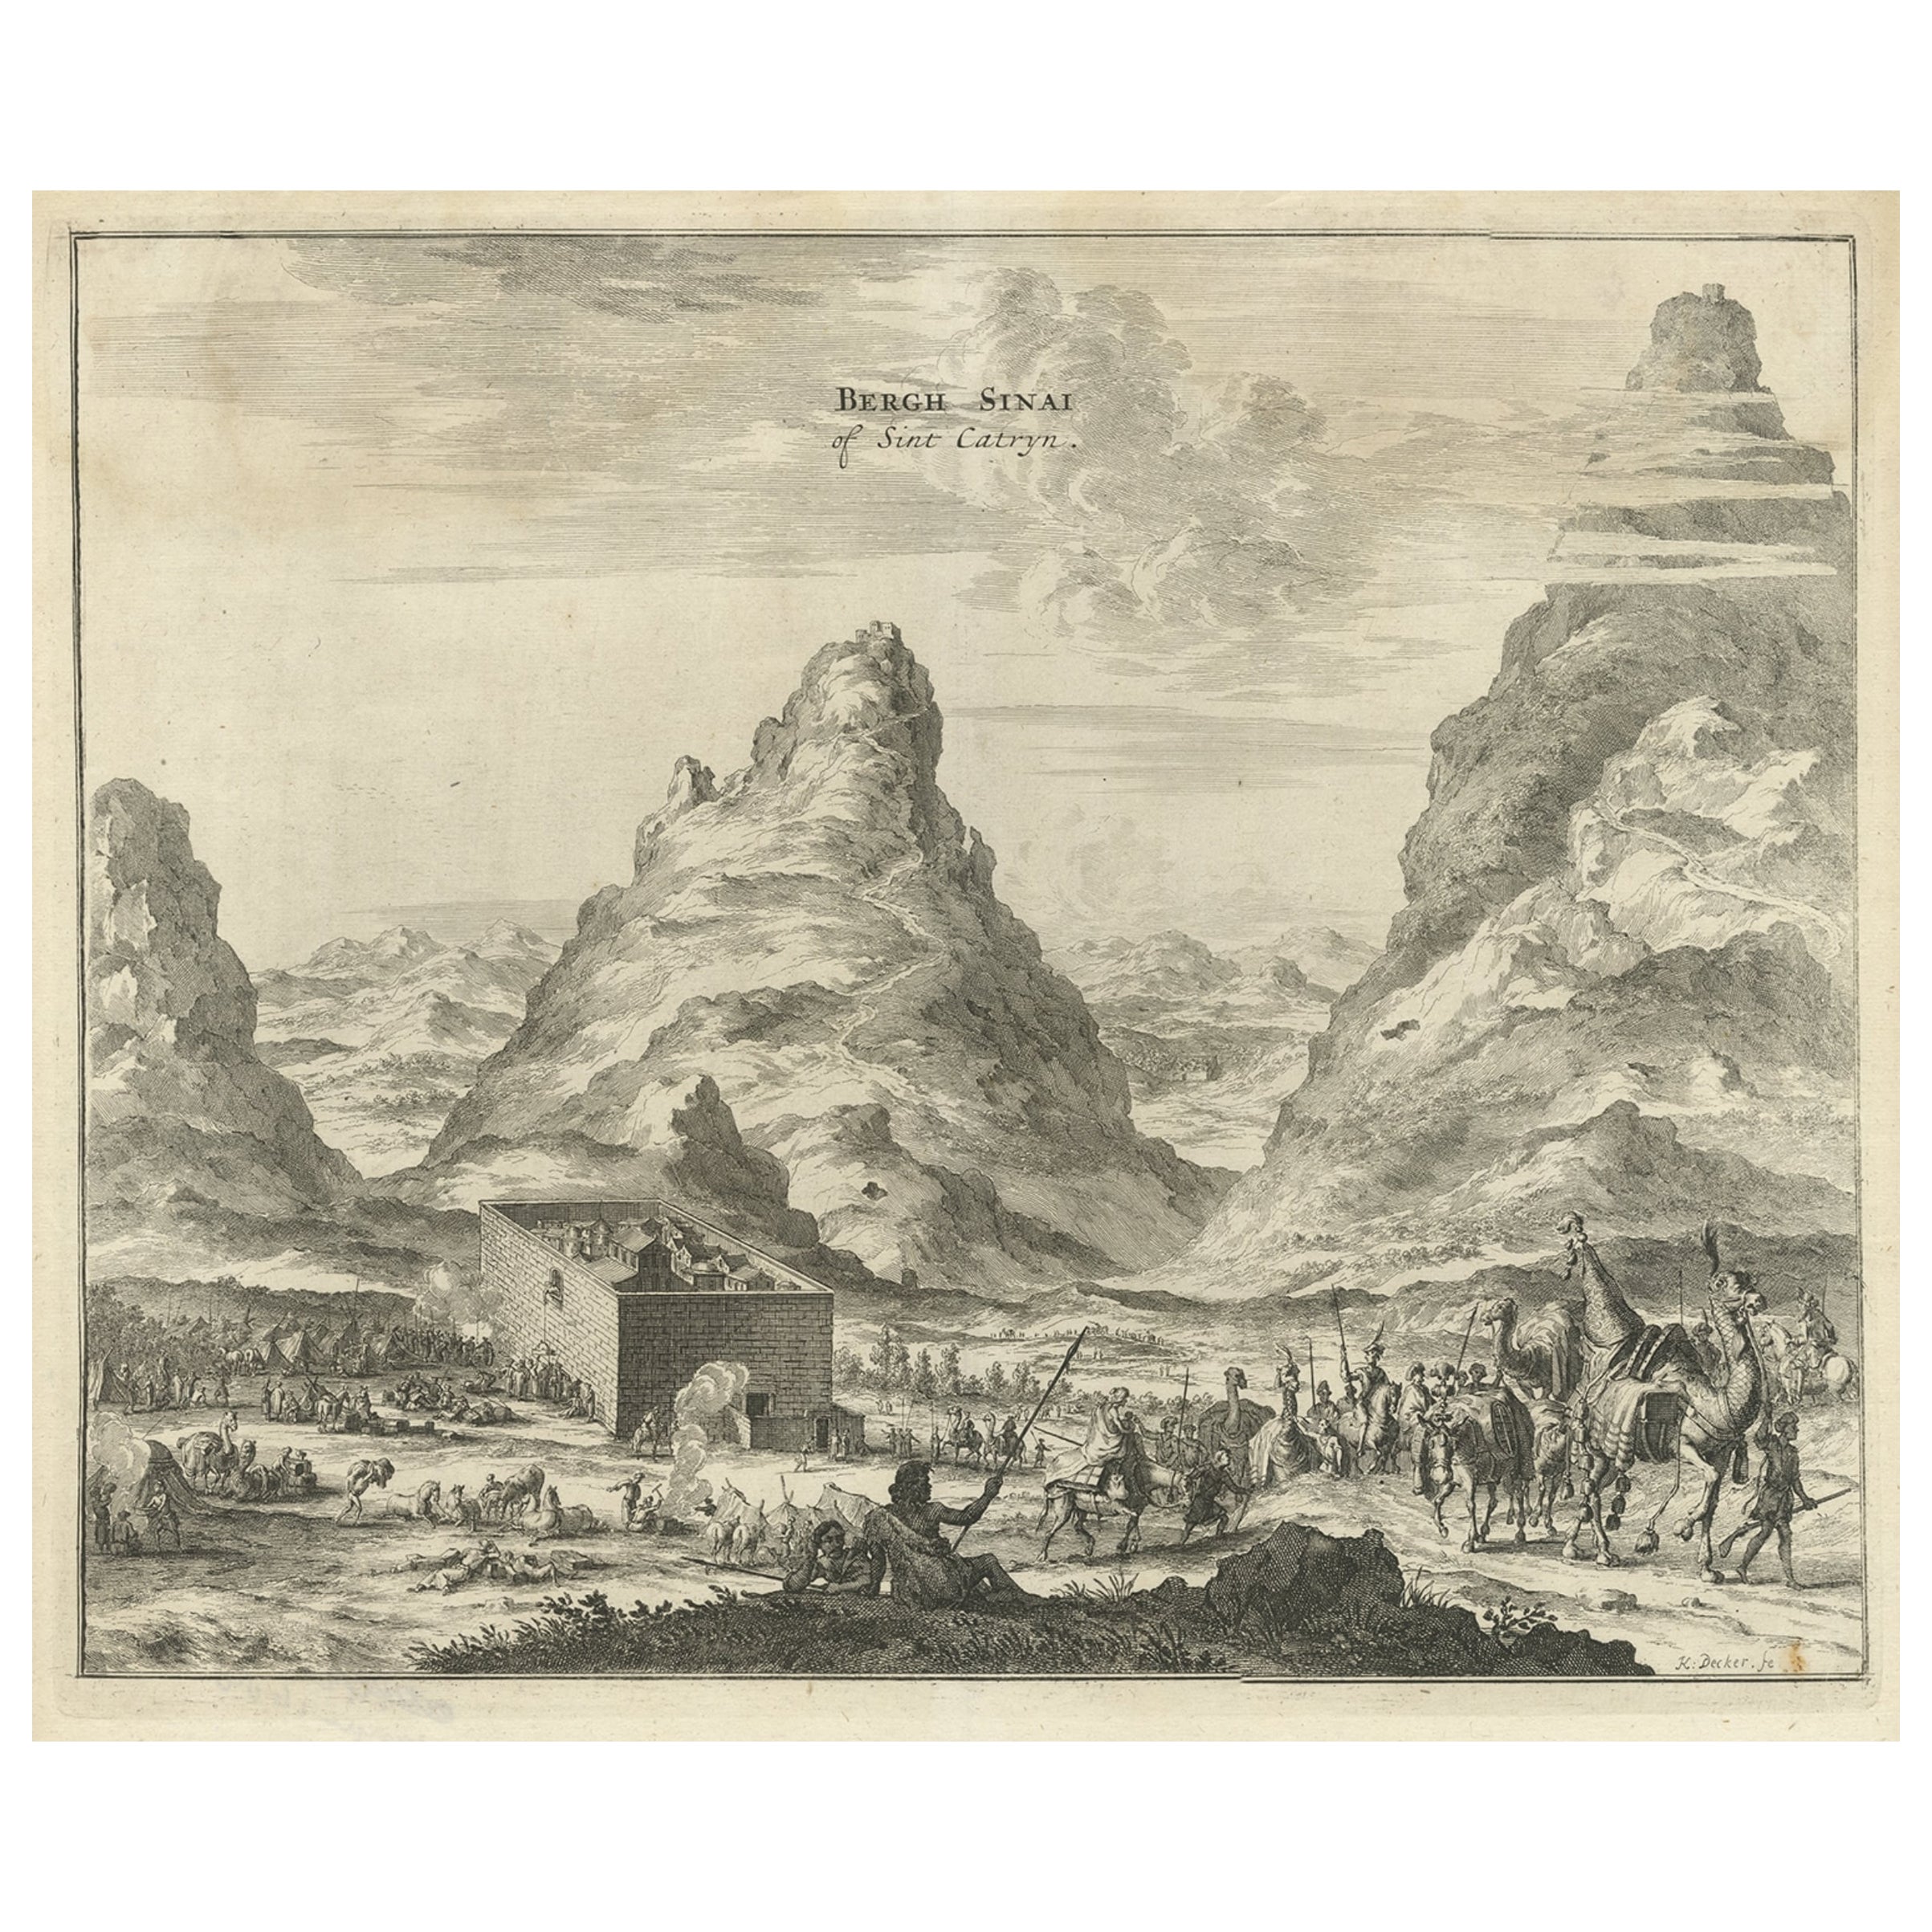 Seltene Gravur des Sinai- Mount Sinai mit St. Catherine's Monastery und Bedouins, 1680